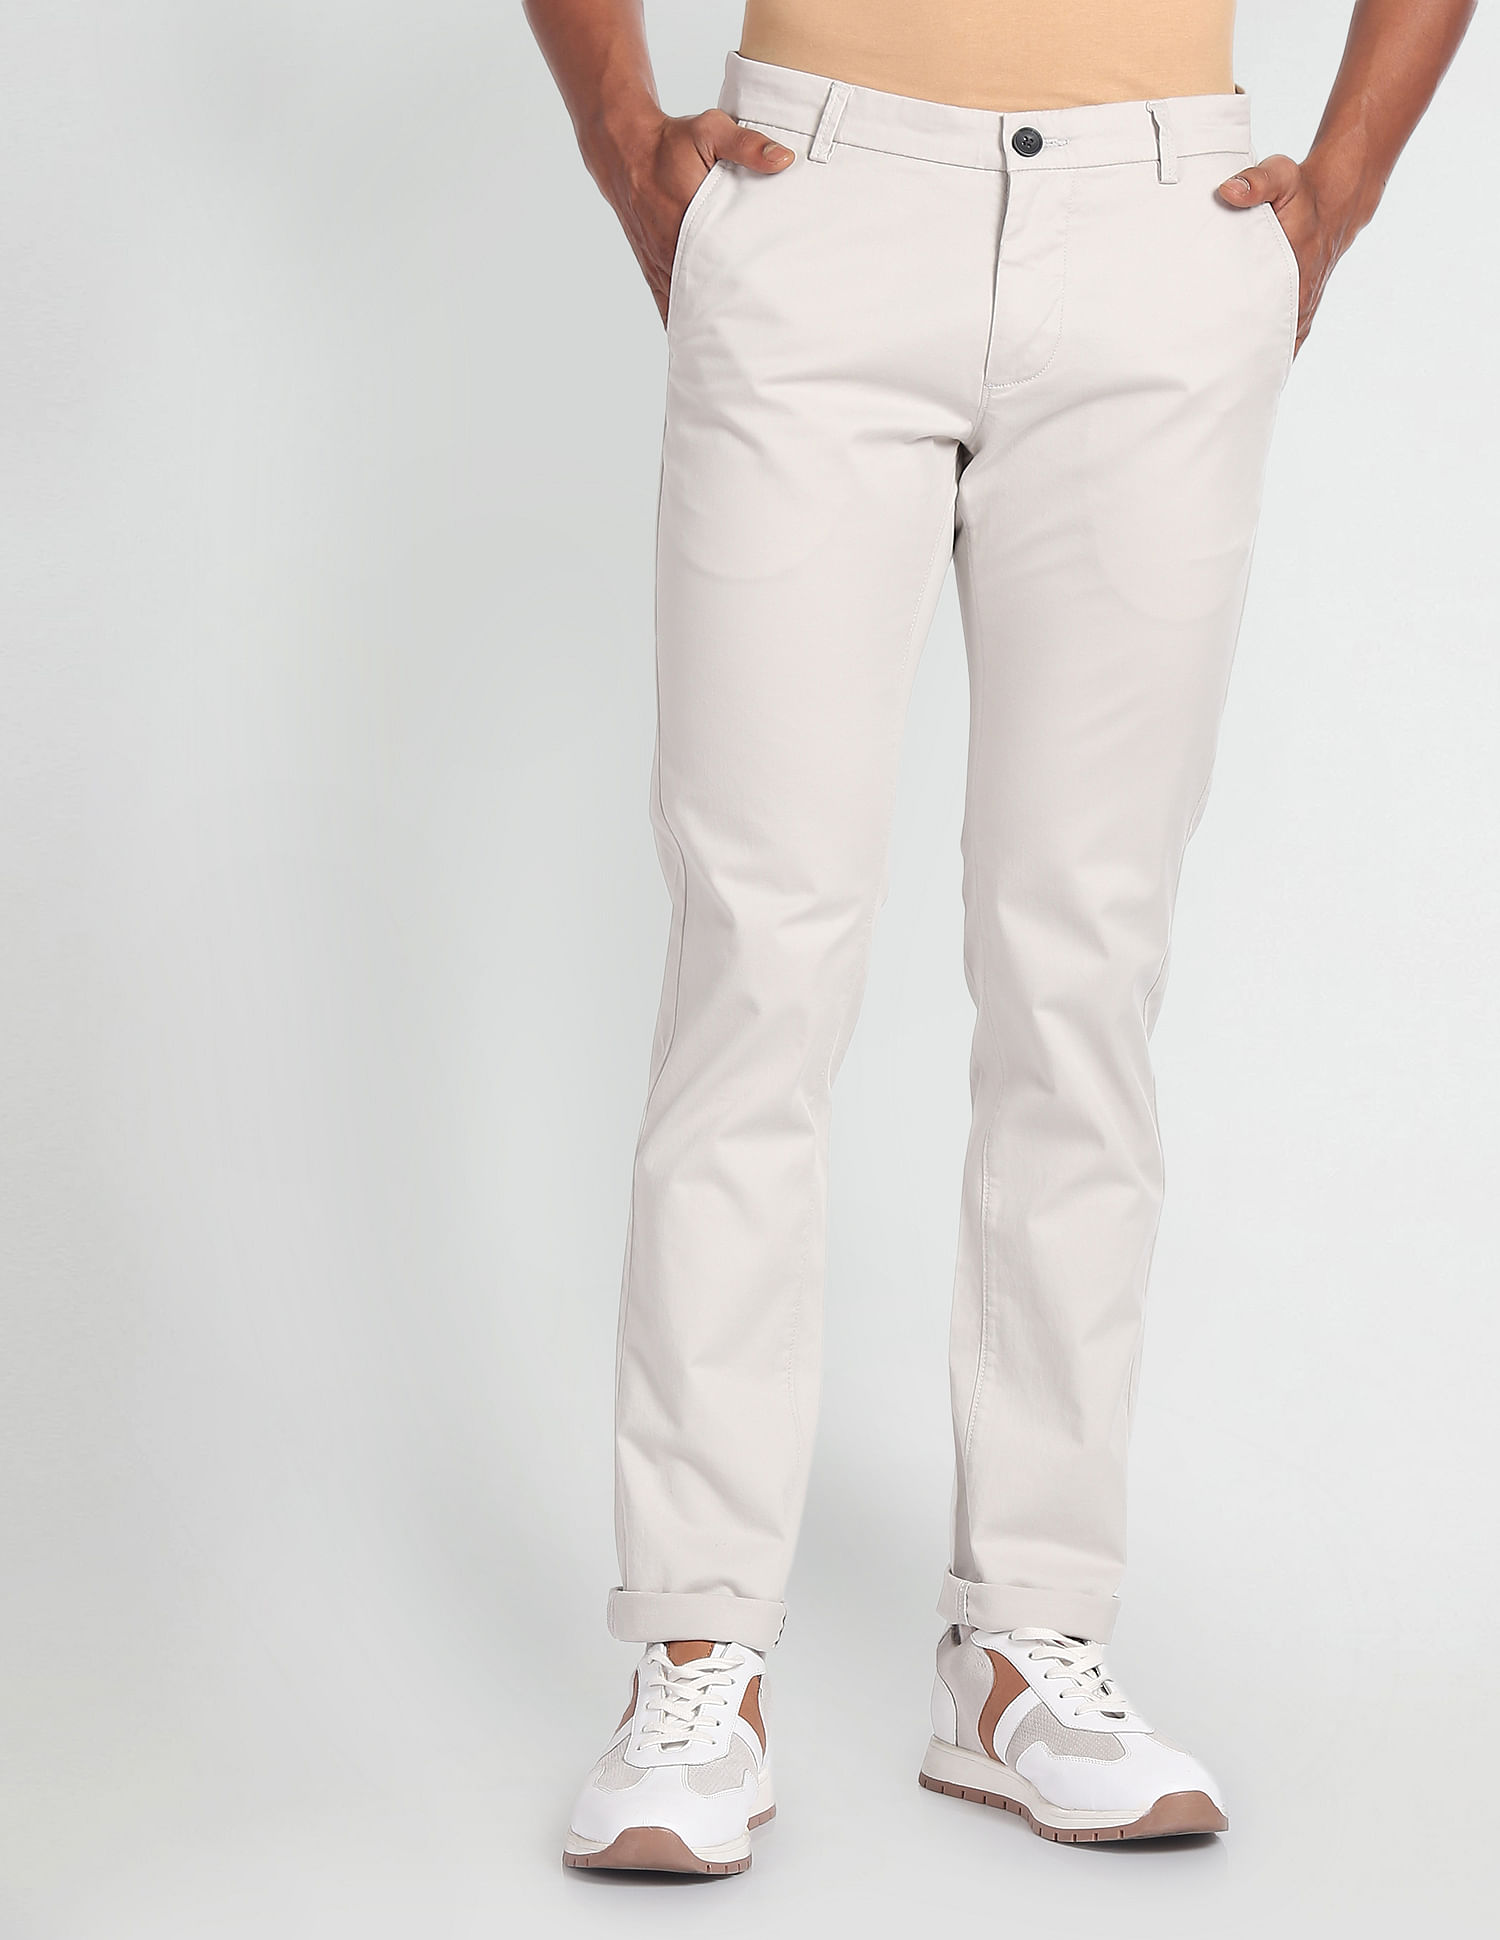 Buy Arrow Newyork Micro Check Polyester Formal Trousers - NNNOW.com